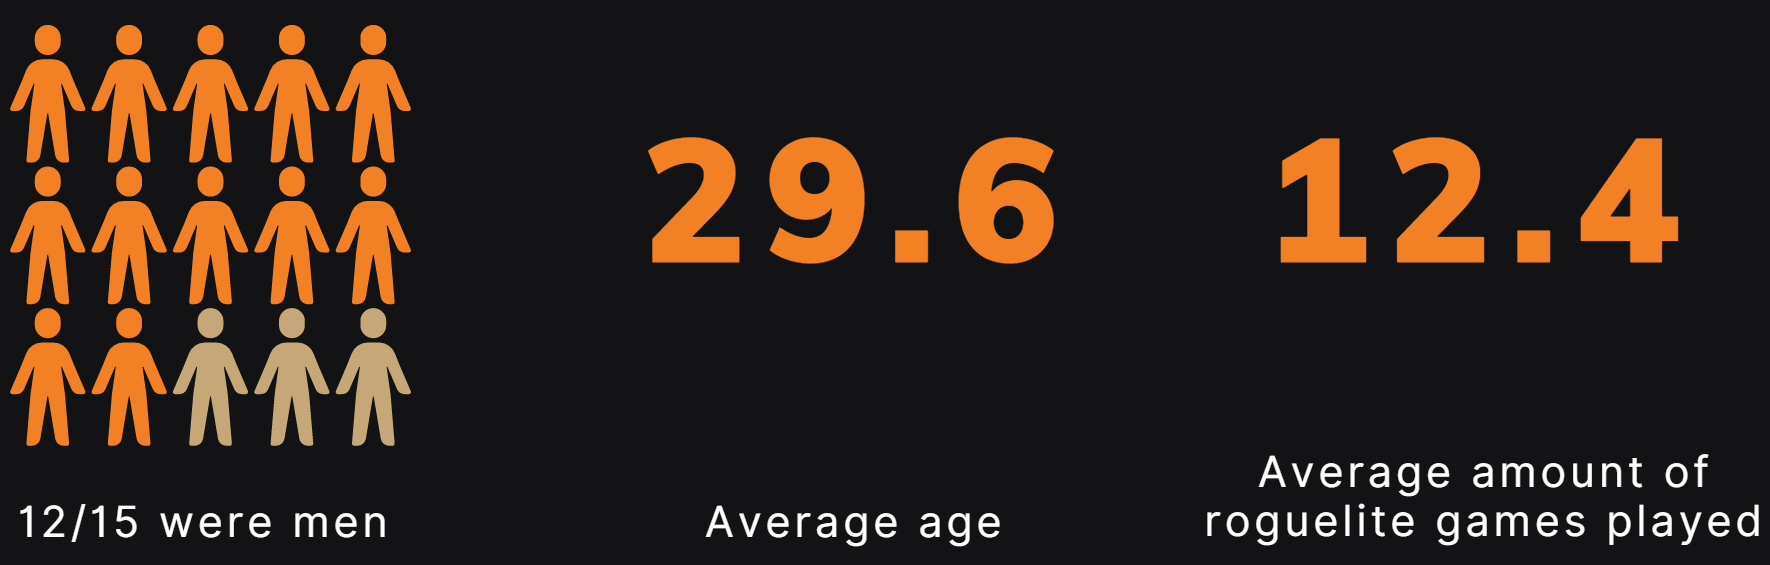 Player demographic: 12/13 were men, average age 29.6, average amount of roguelites played 12.4